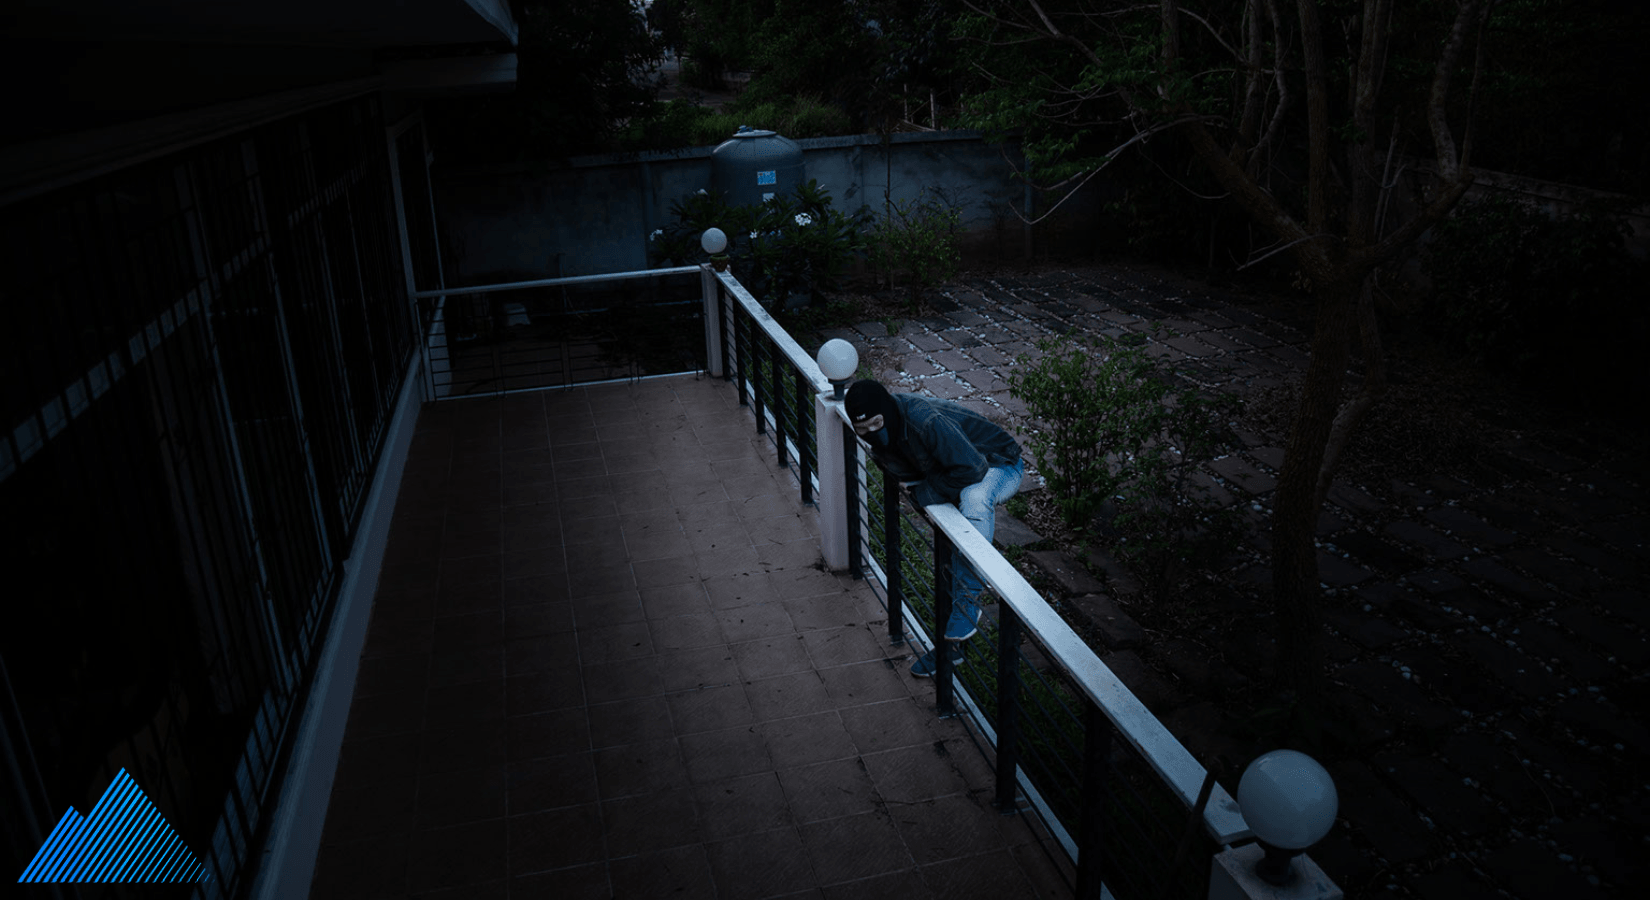 Person trespassing at night